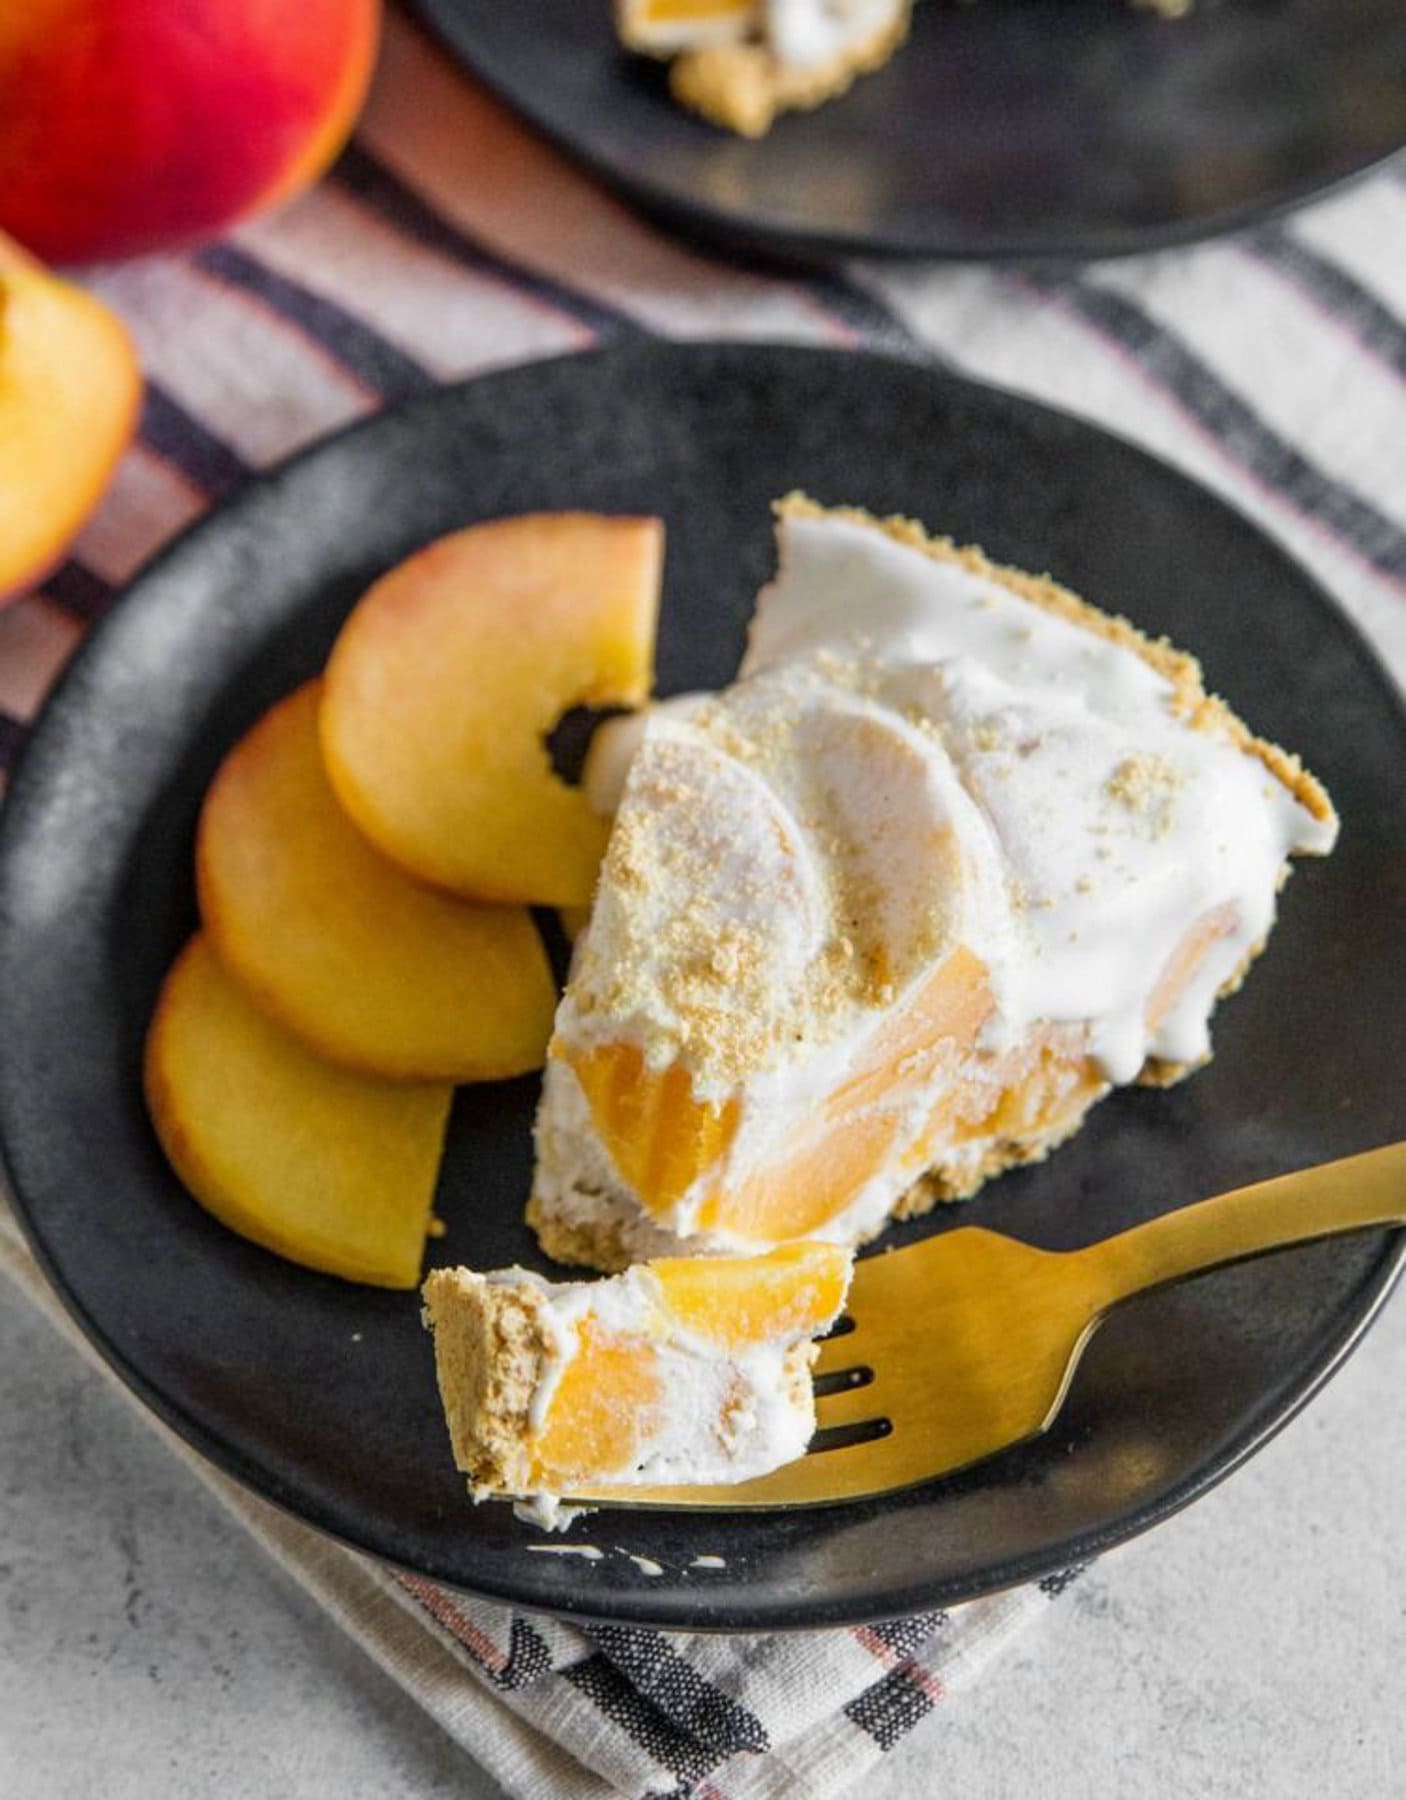 Icebox Peach Pie served with peaches